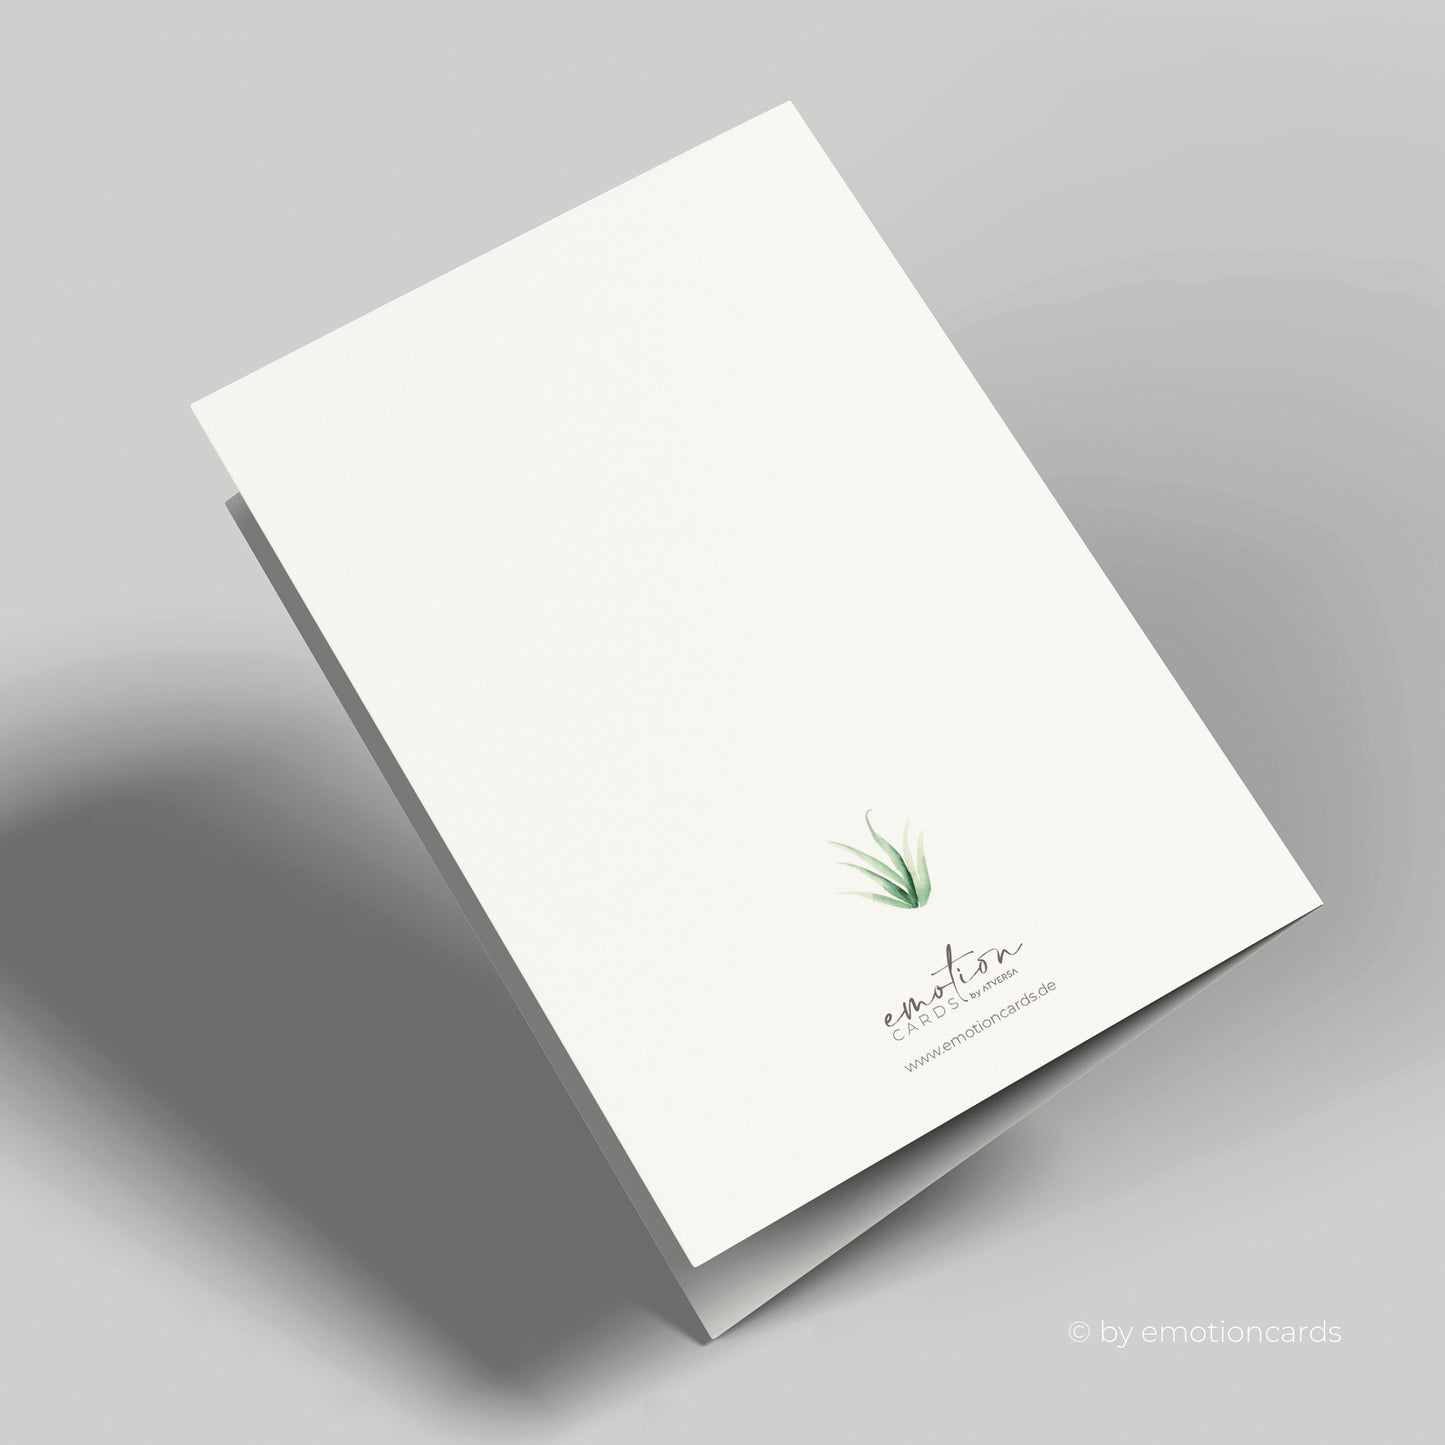 Geburtstagskarte | Dino Stegosaurus grün